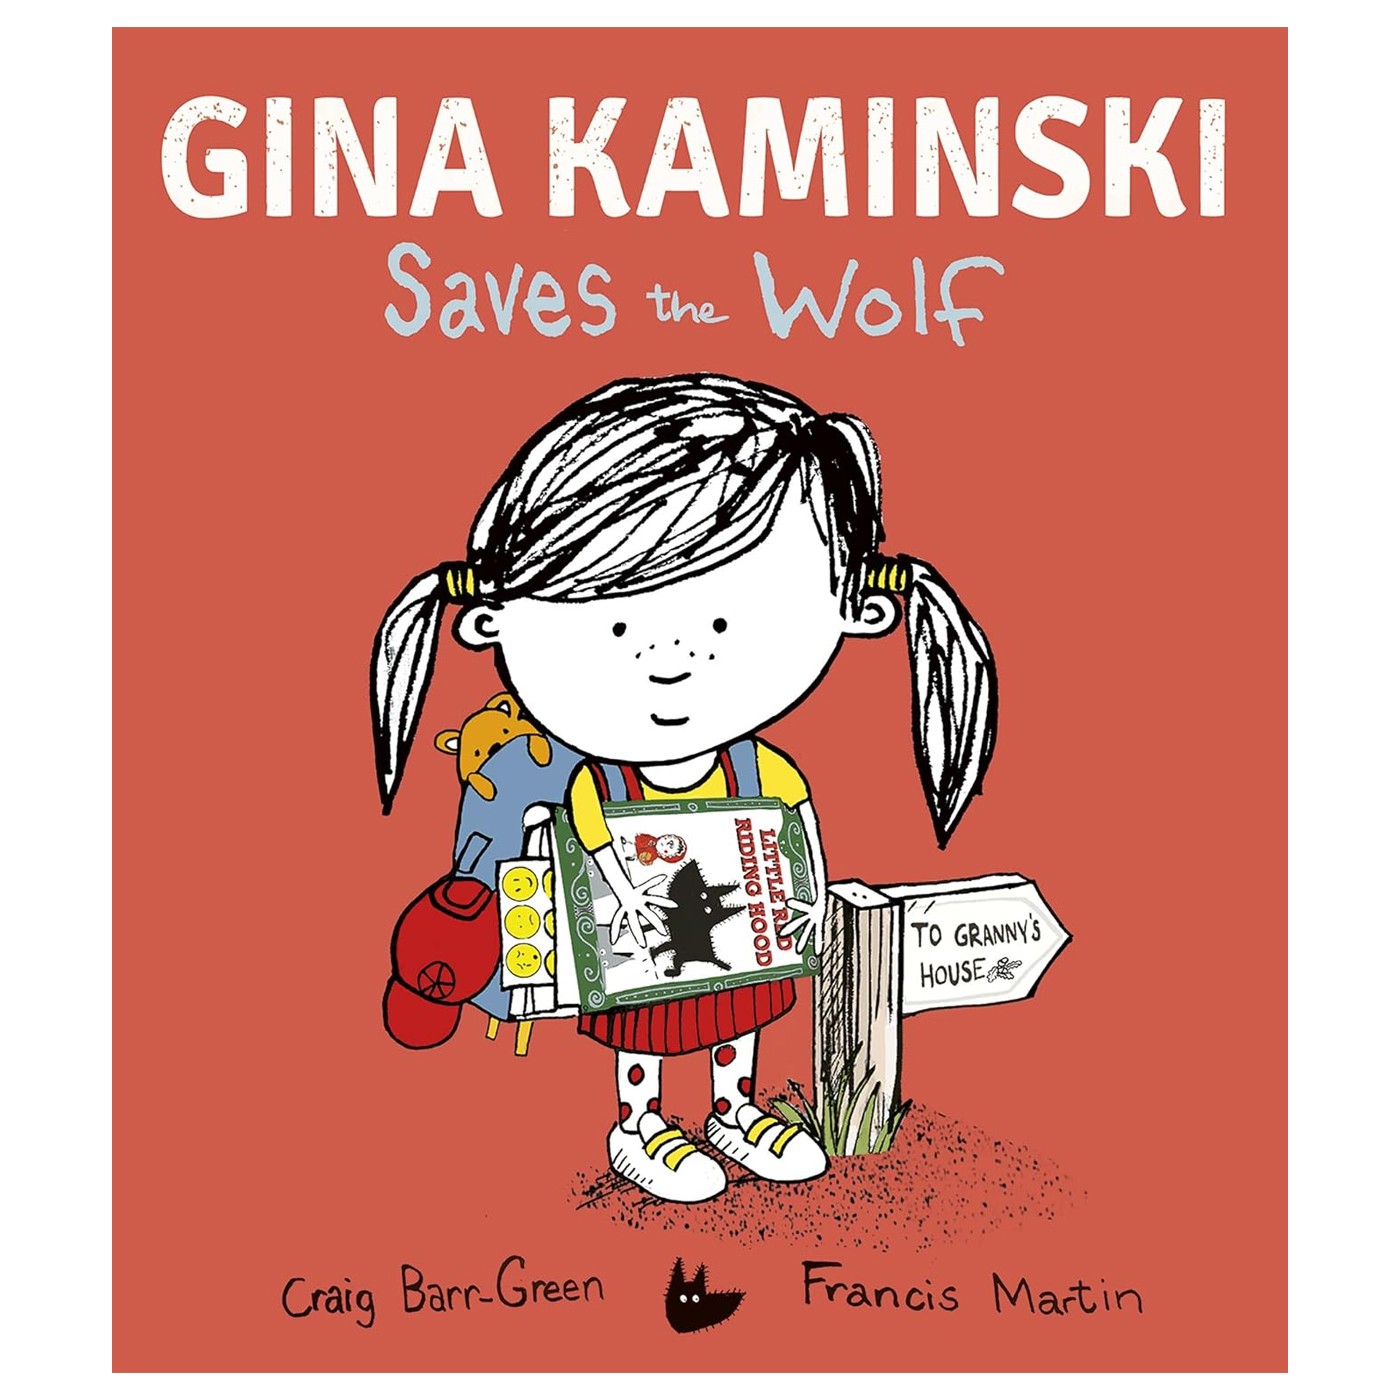  Gina Kaminsky Saves the Wolf